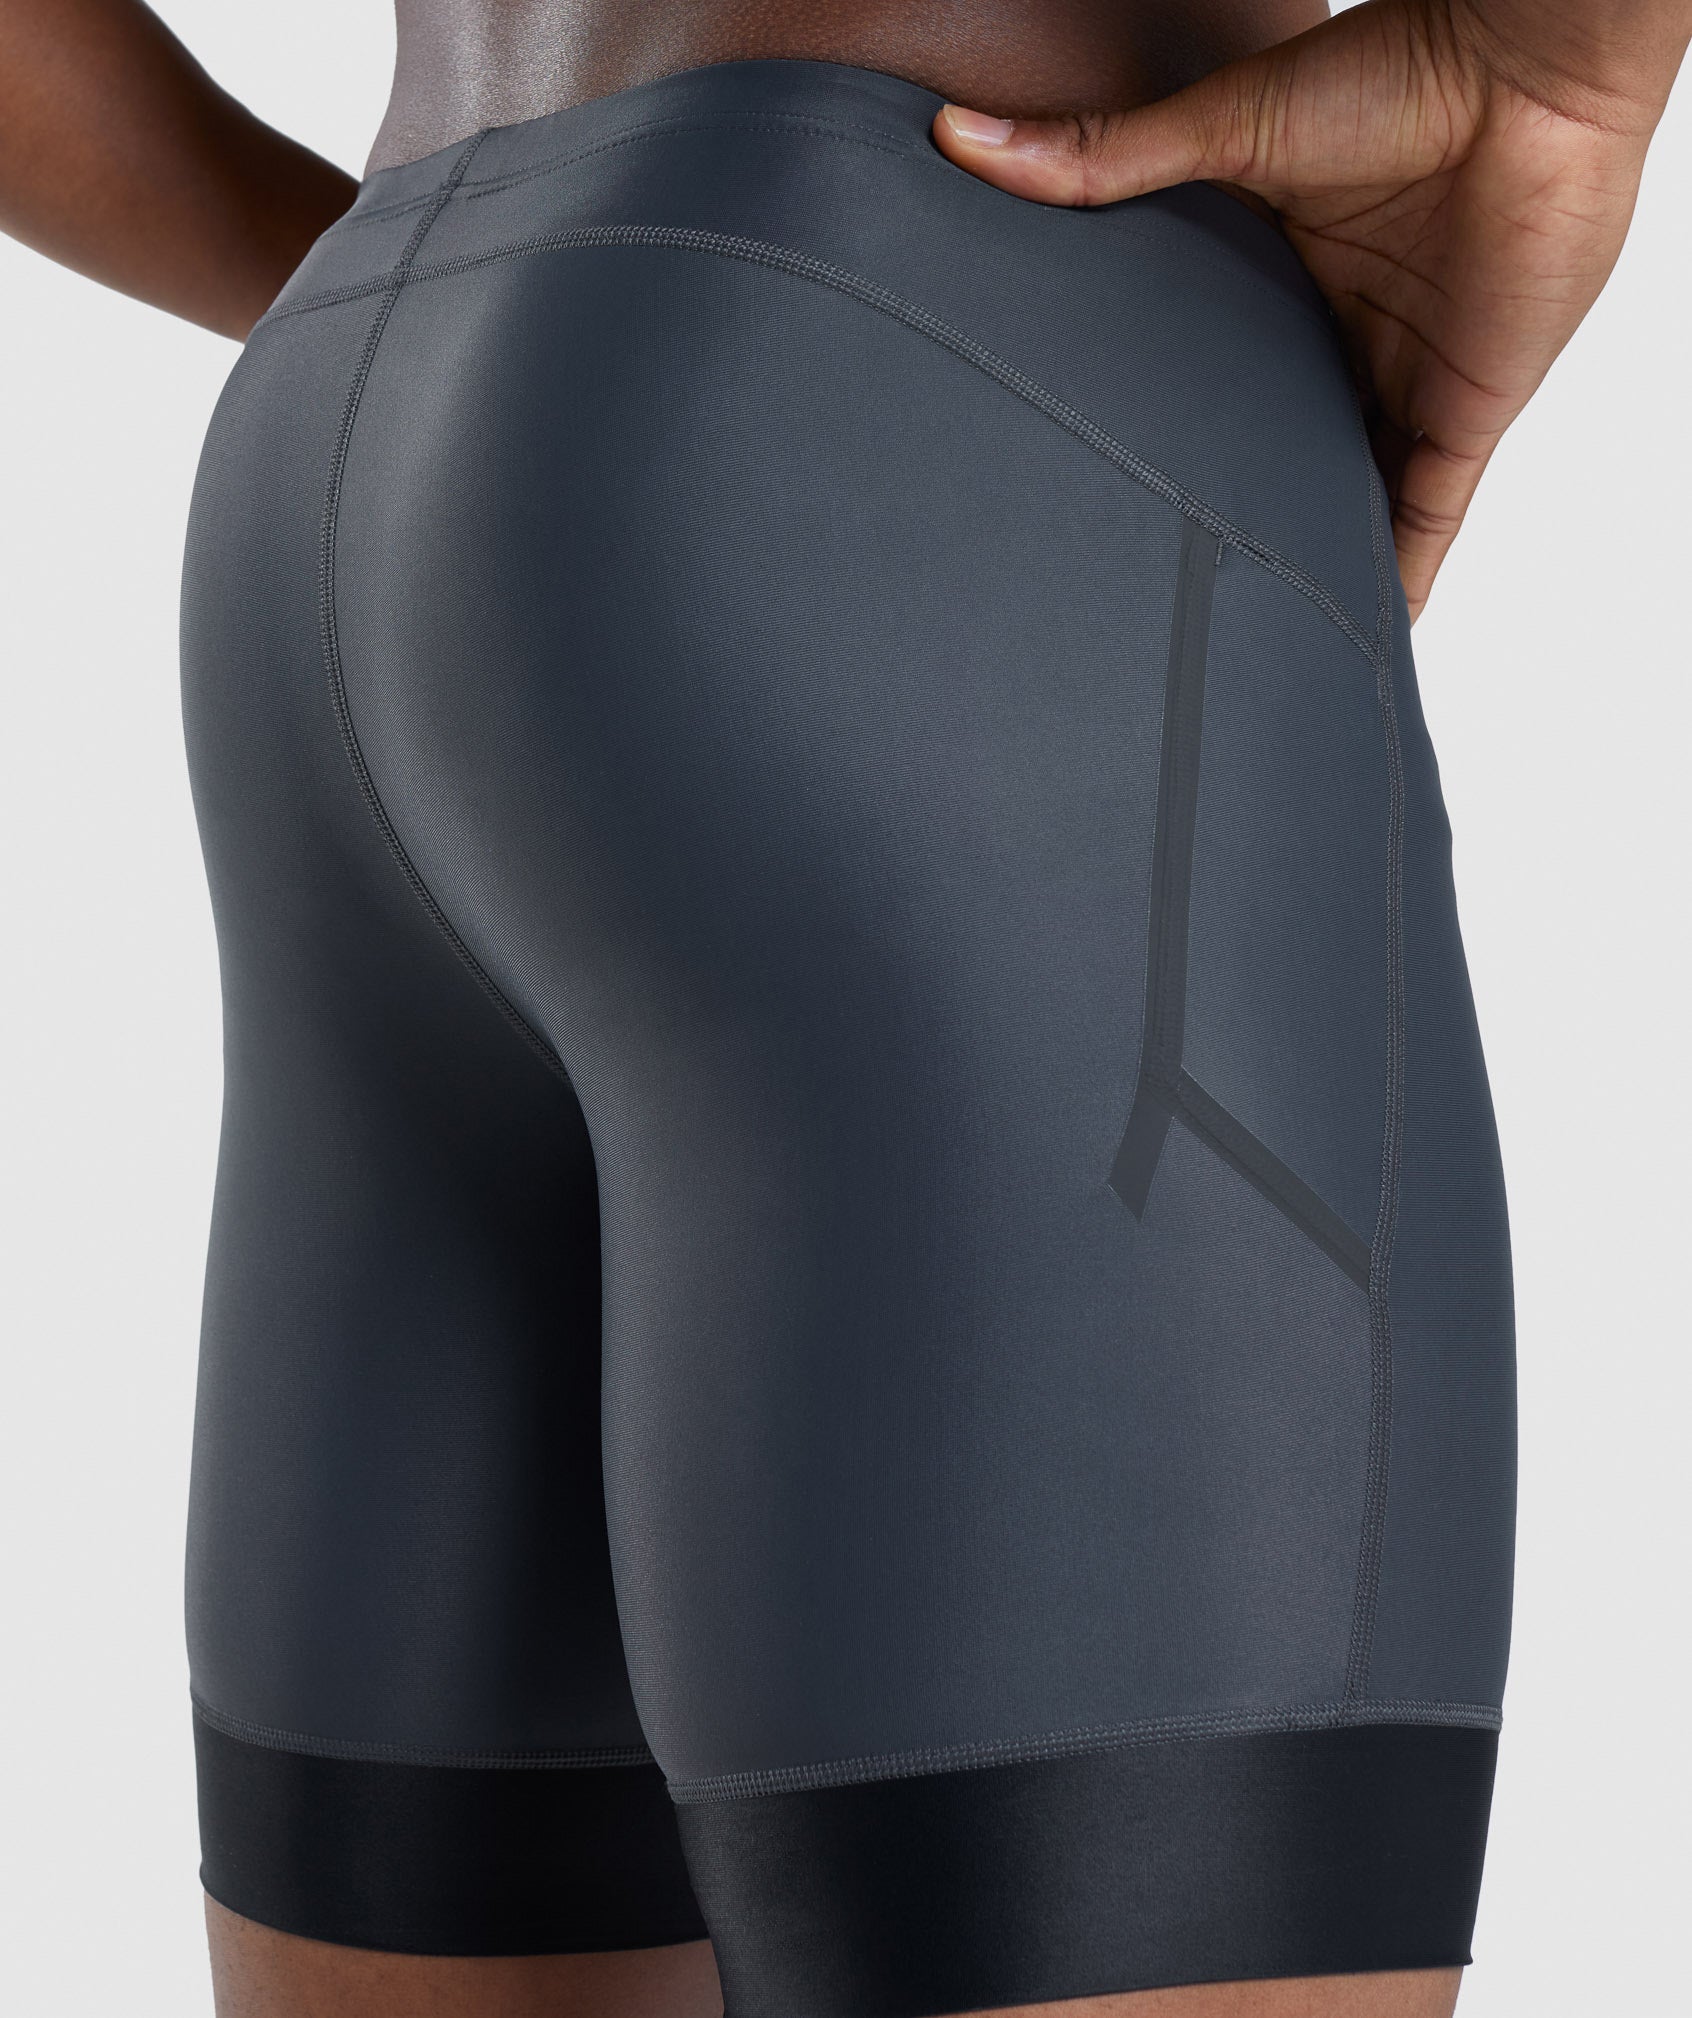 Apex Multi Shorts in Onyx Grey/Black - view 5